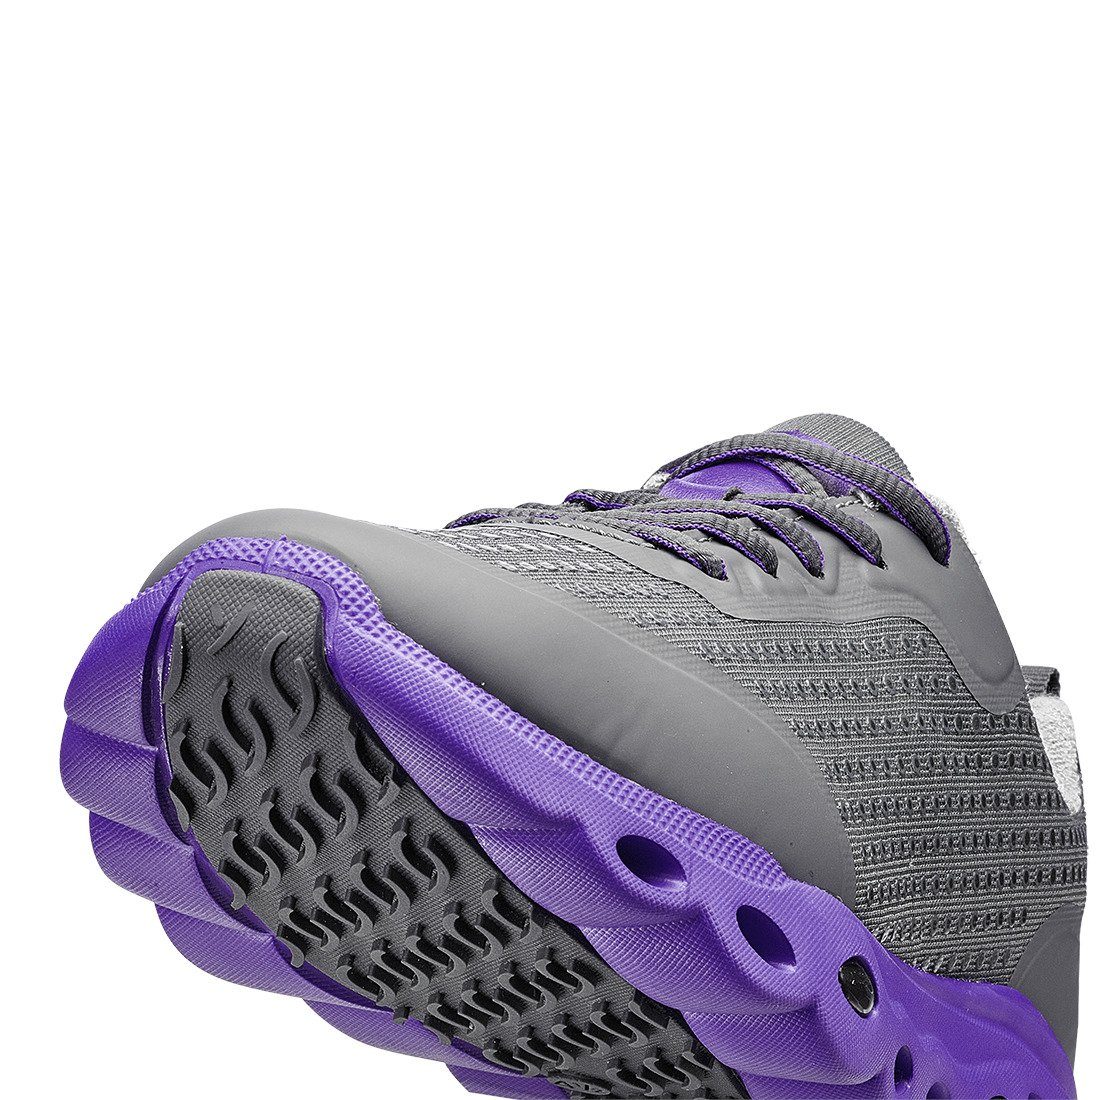 Materialmix 043619 - Ara Ara Schuhe, Sneaker Sneaker Racer Damen grau